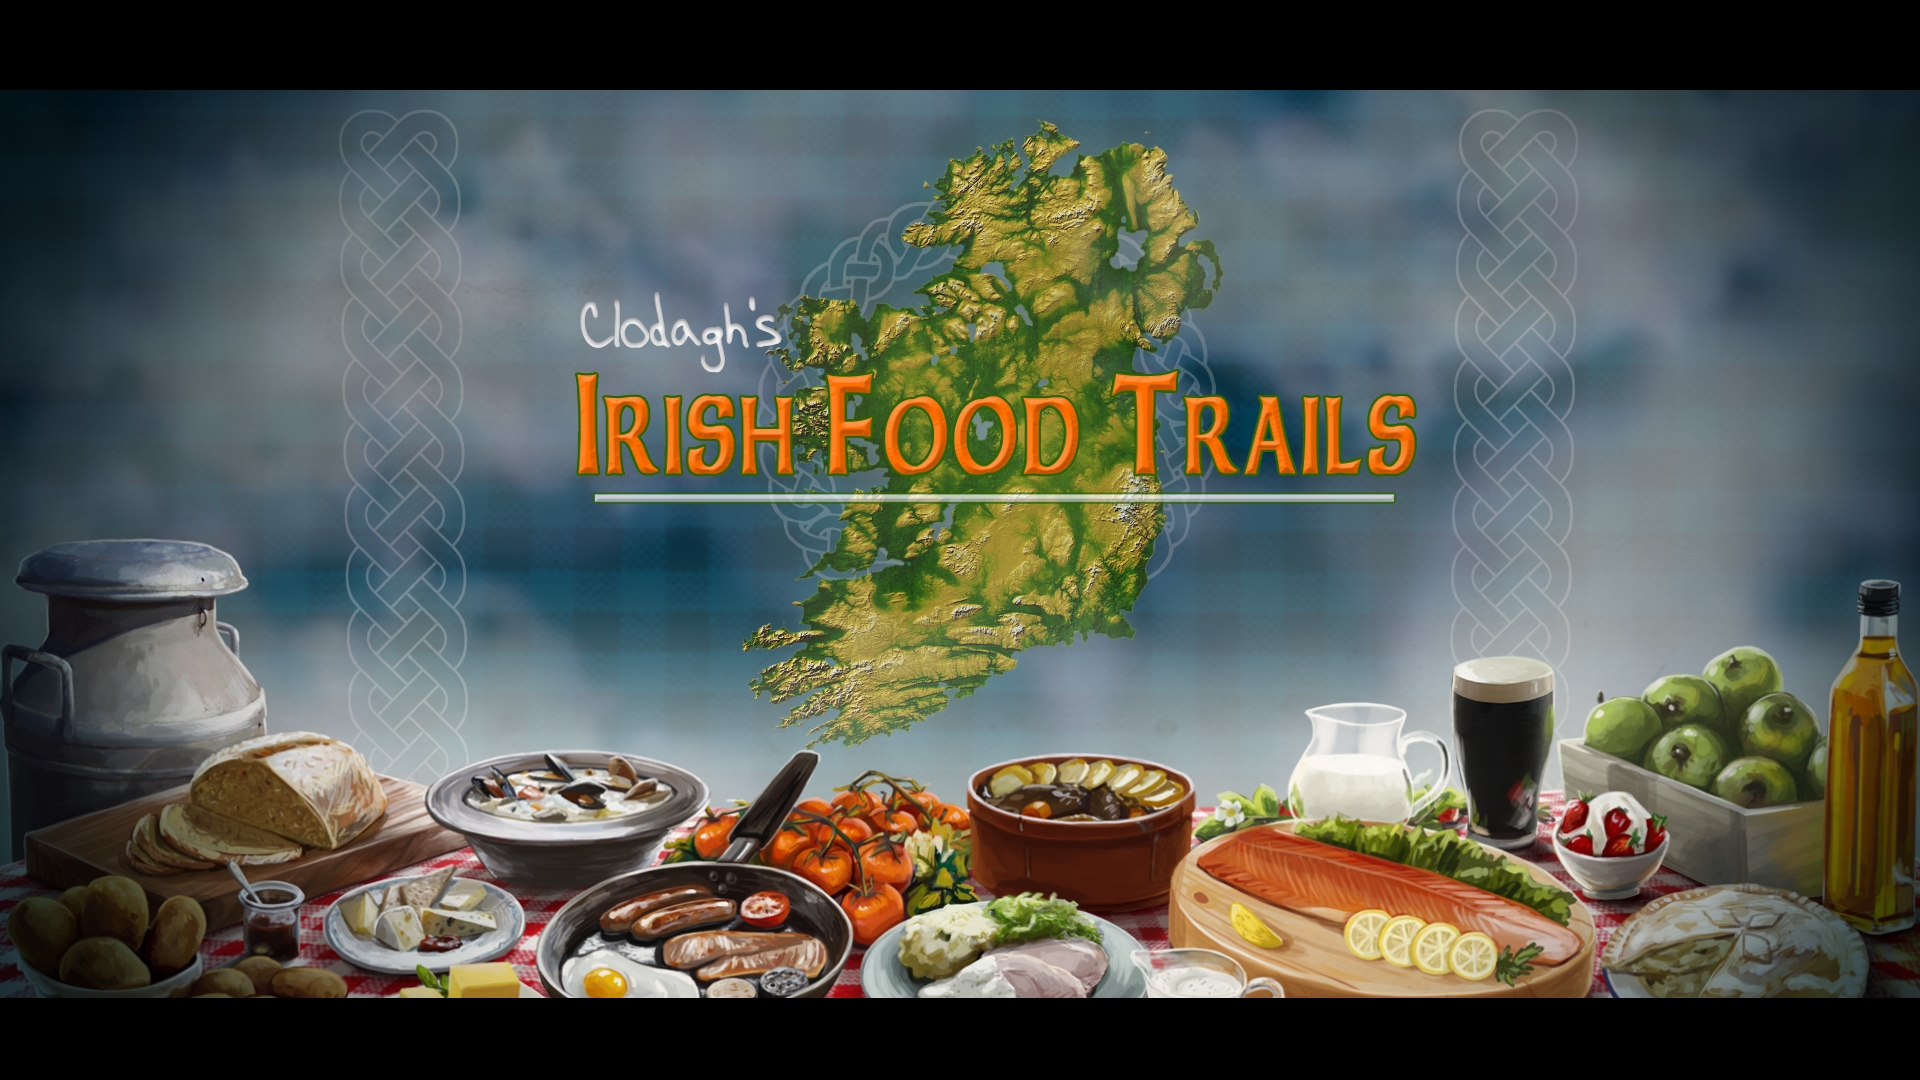 Good Old Irish Food Recipes